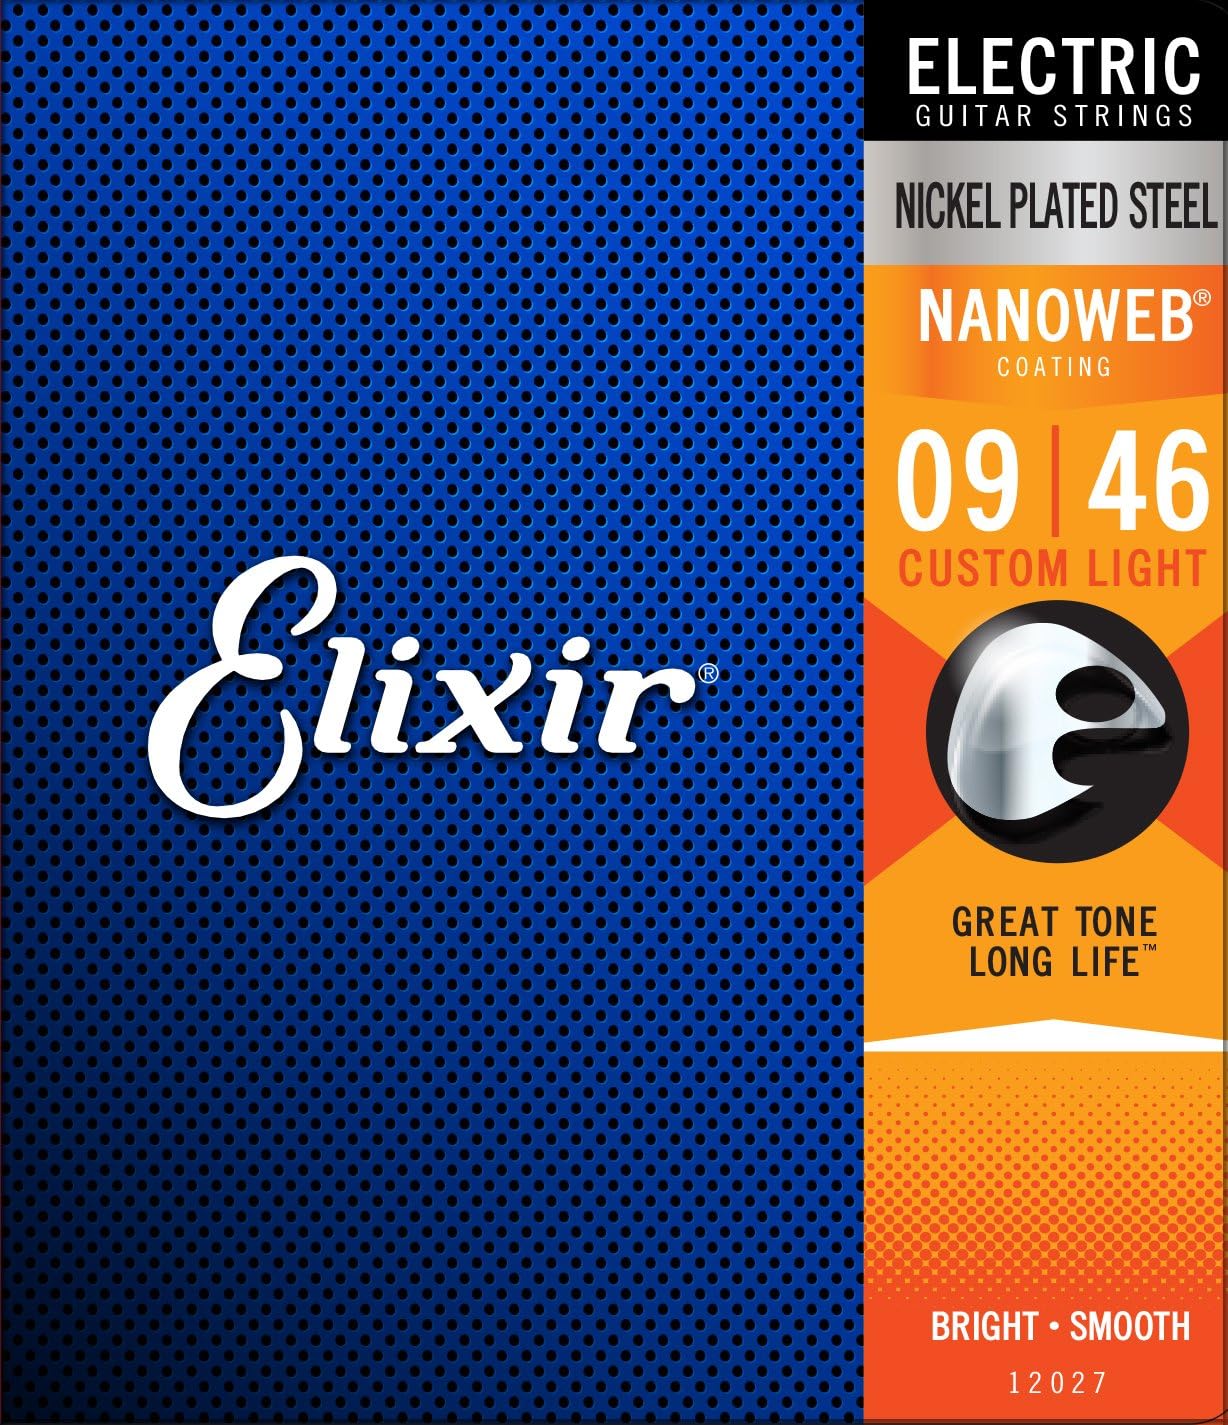 Elixir Electric Guitar Strings Different Sizes: Super Light 009-042 / Custom Light 009-046 / Light 010-046 / Medium 011-049 